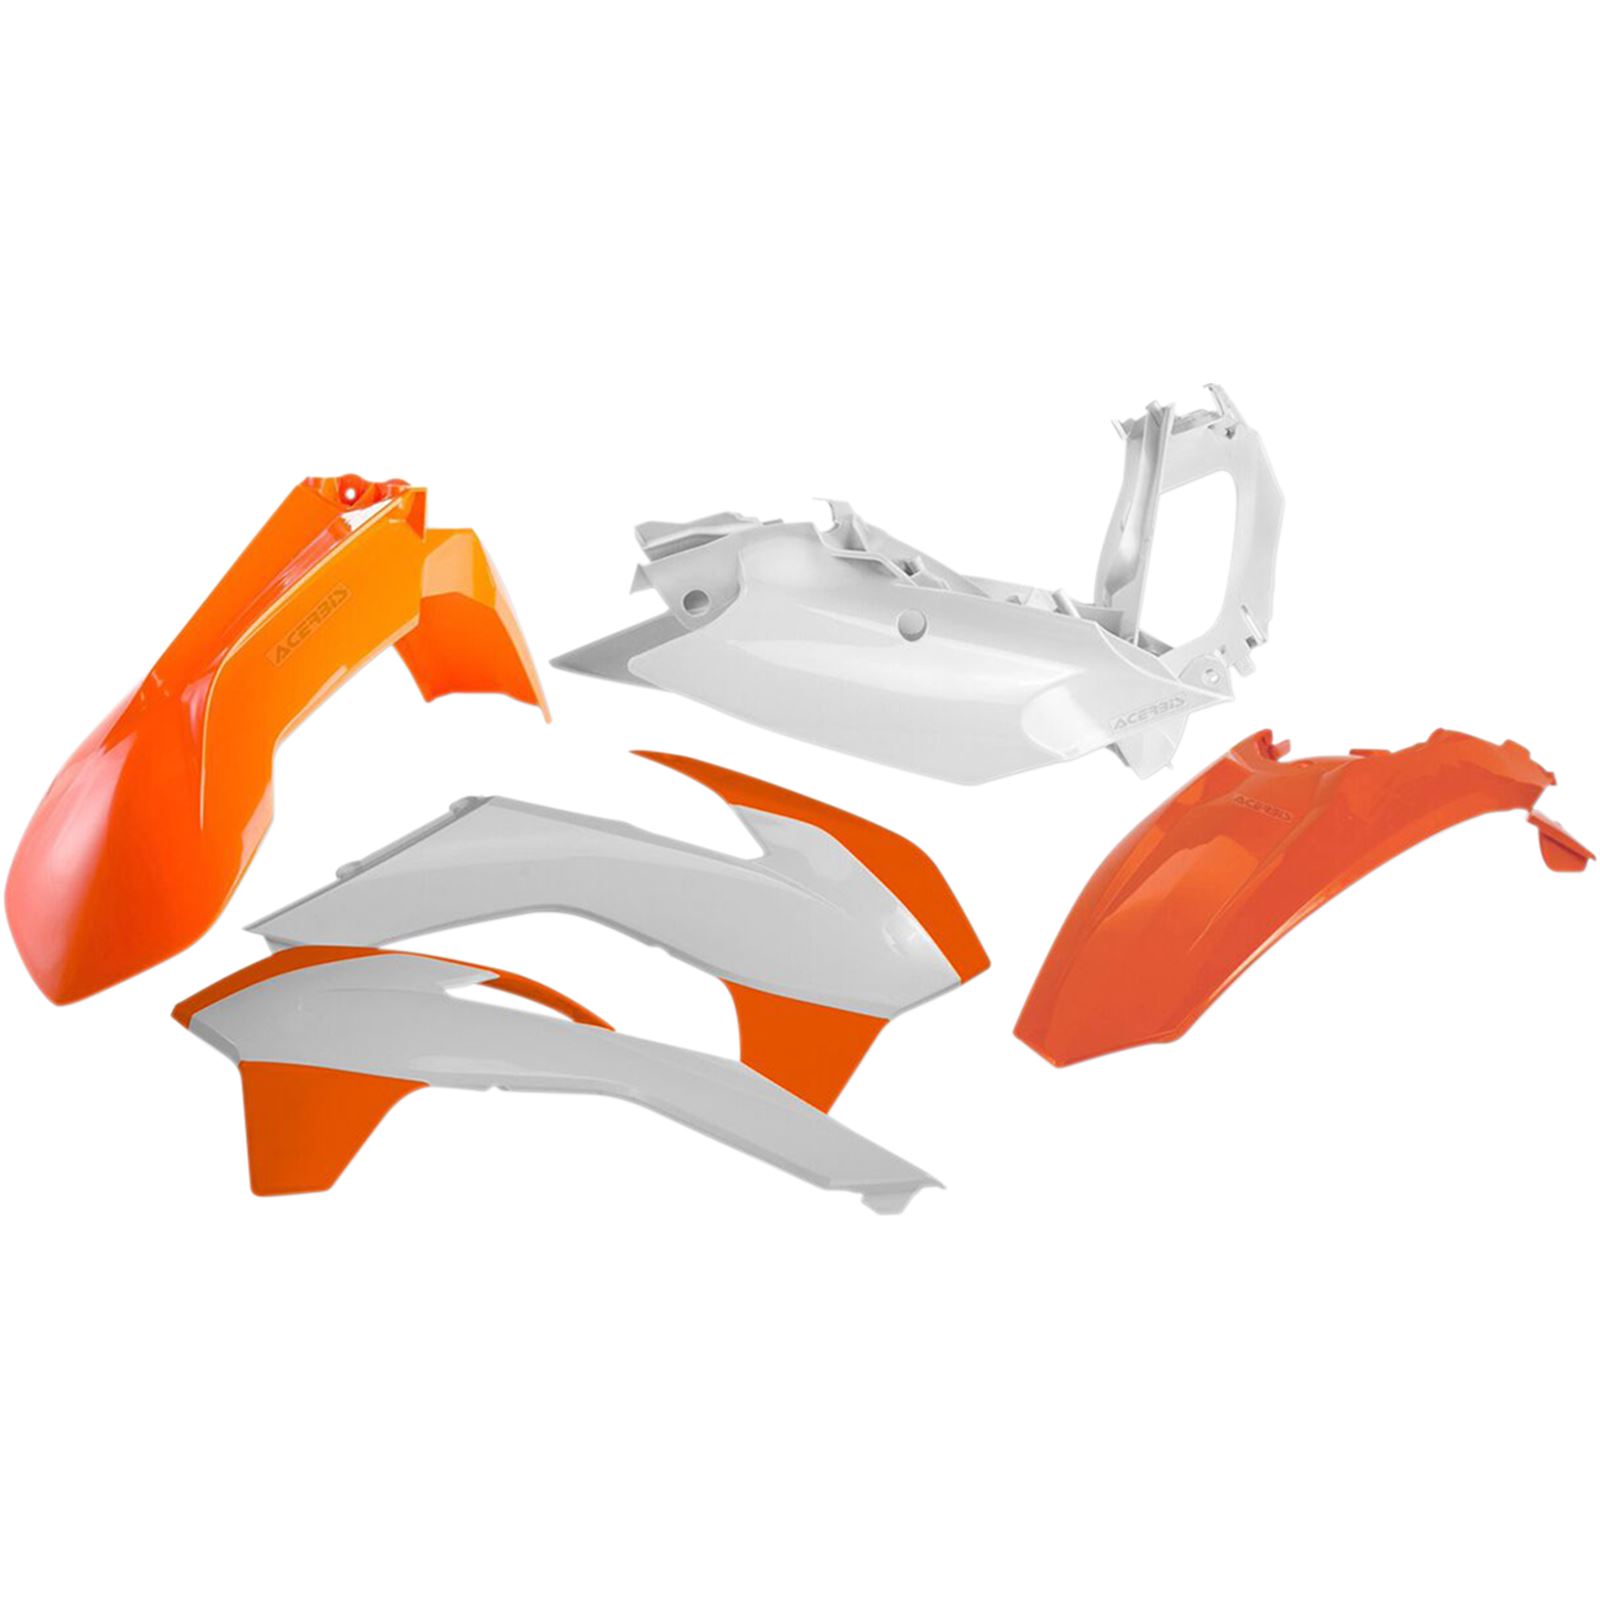 Acerbis Plastic Body Kit - Orange/White